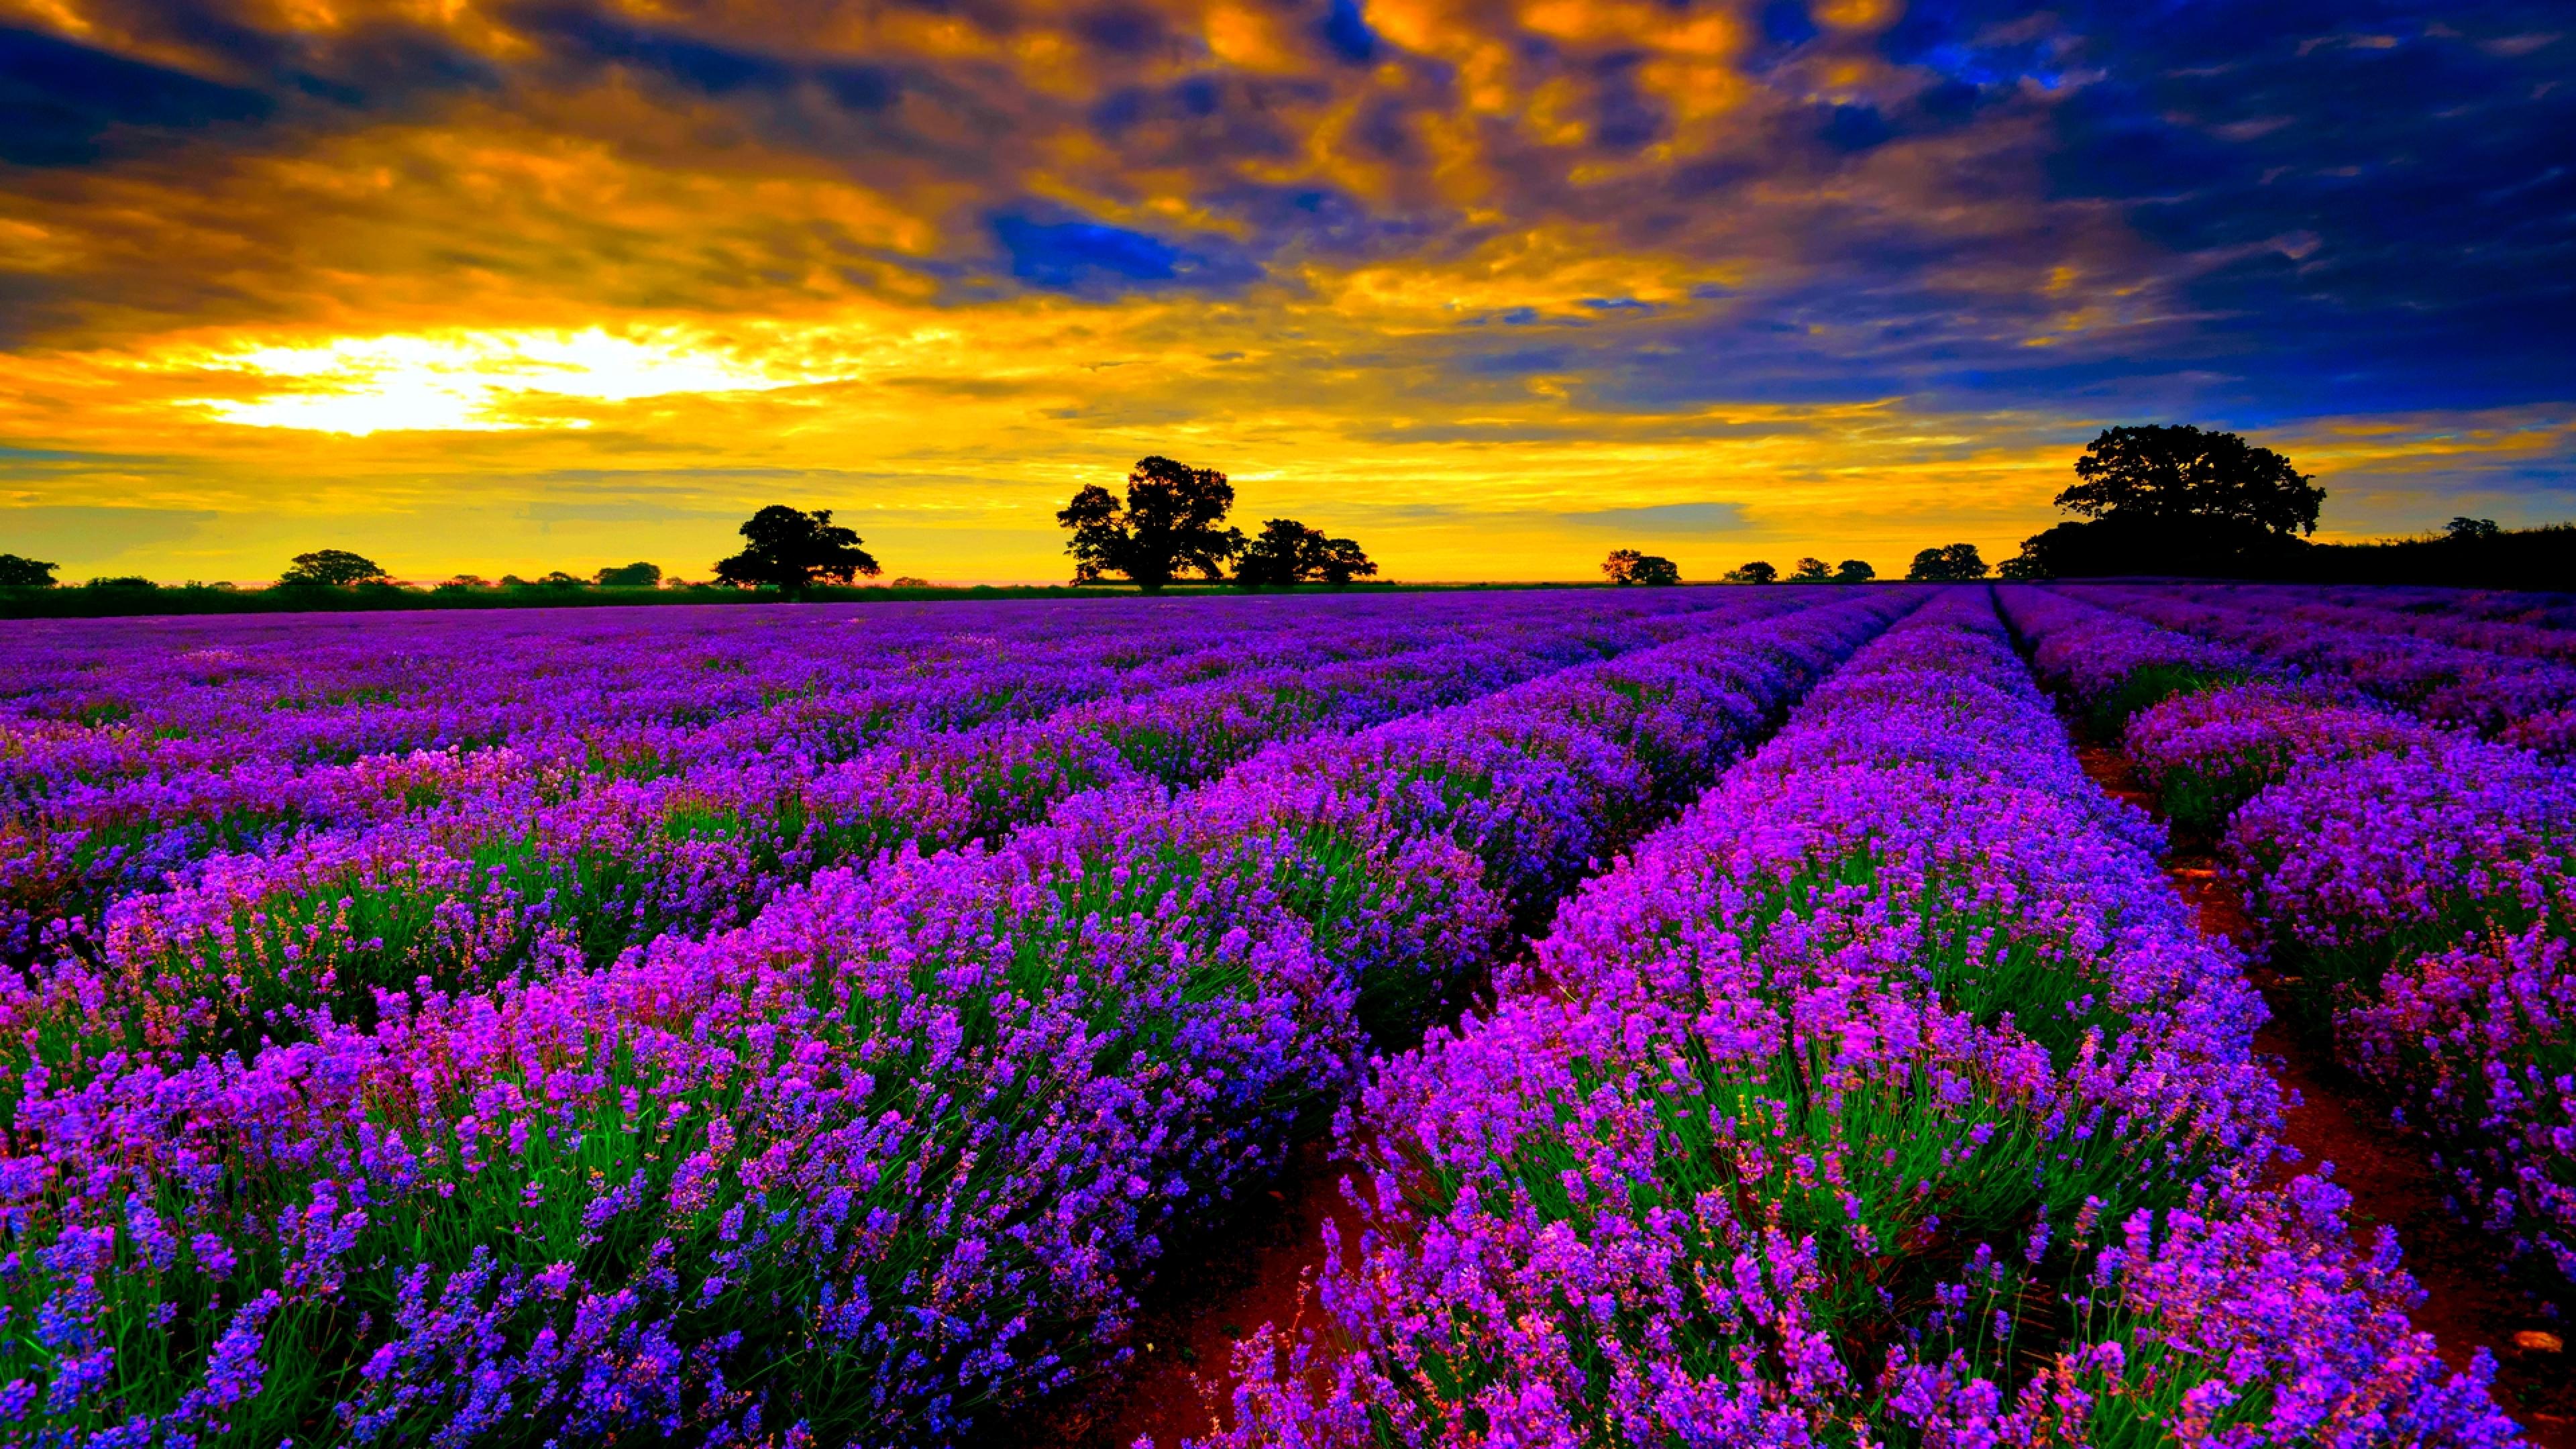 Field Lavender Purple Flowers Sunset Orange Sky Clouds Hd Wallpapers